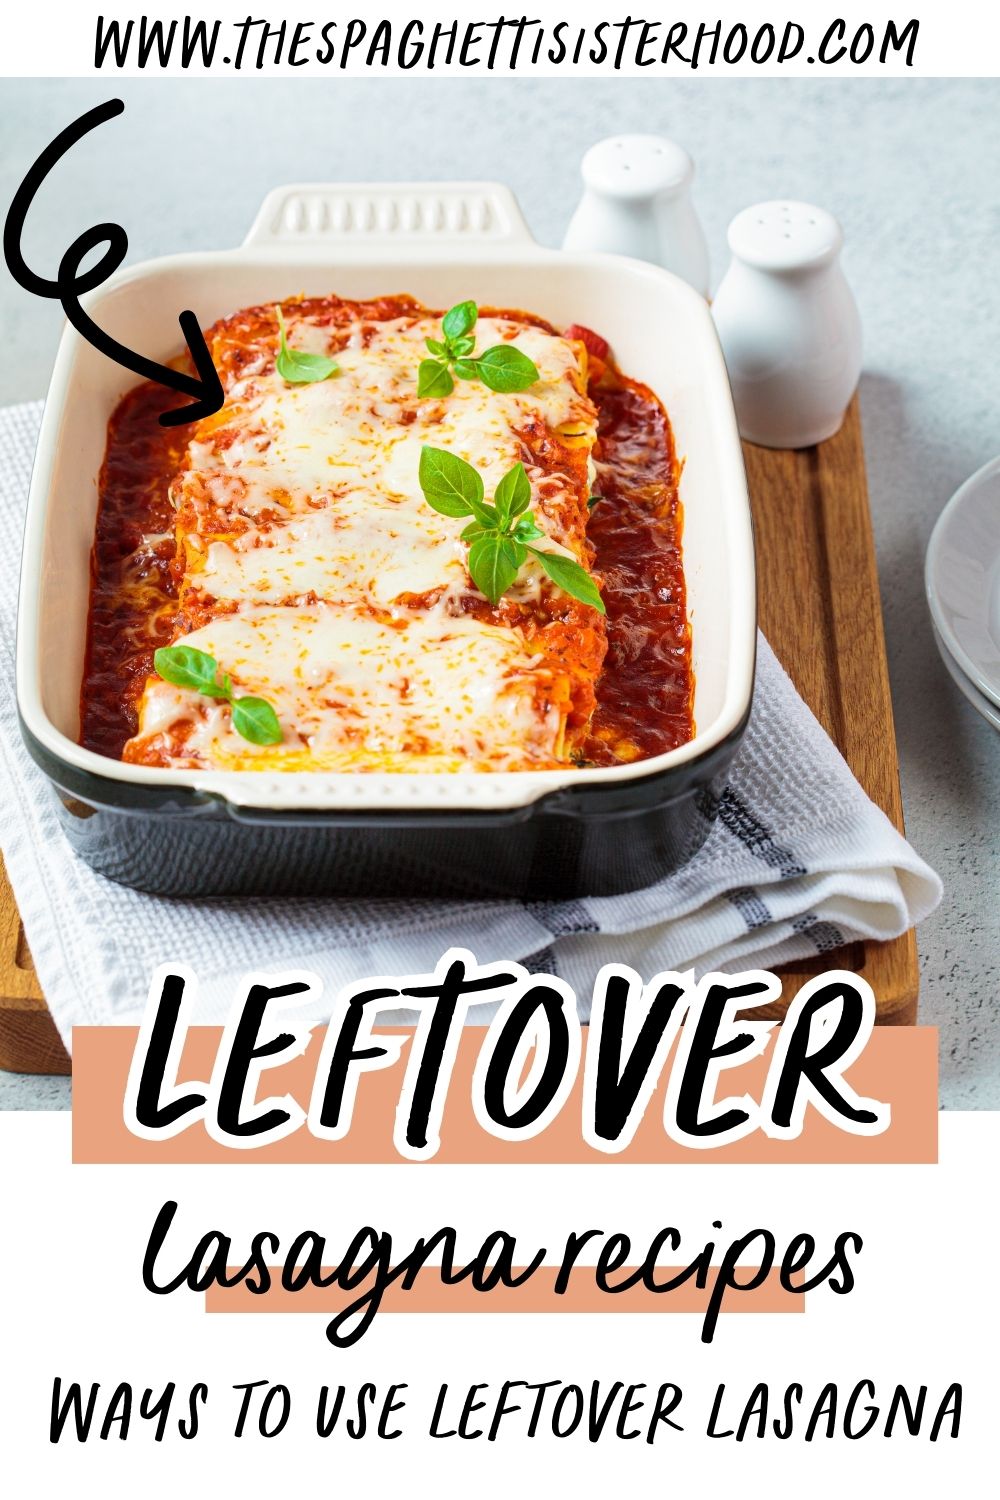 13 Creative Leftover Lasagna Recipes To Create Tasty Dishes